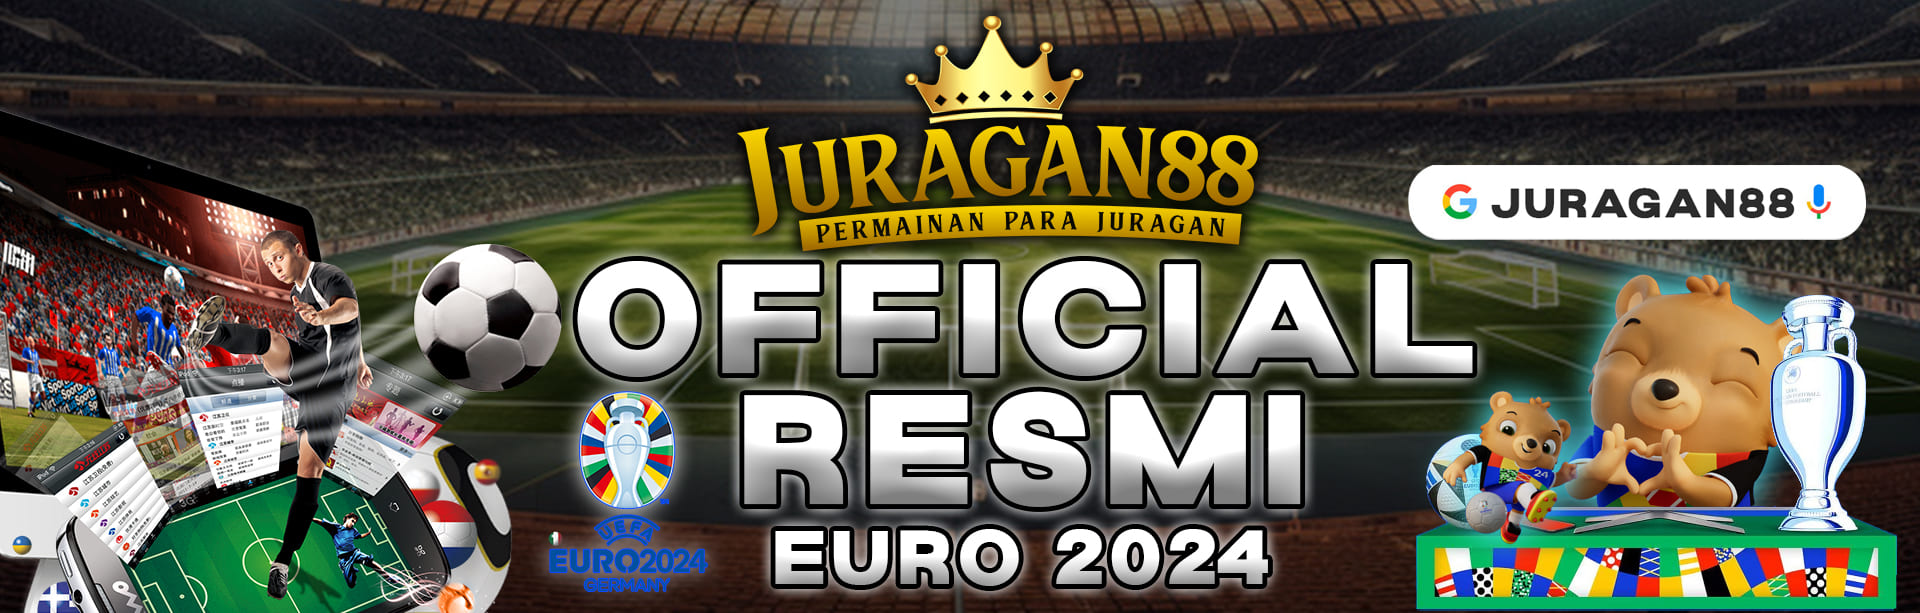 JURAGAN88 OFFICIAL RESMI EURO 2024